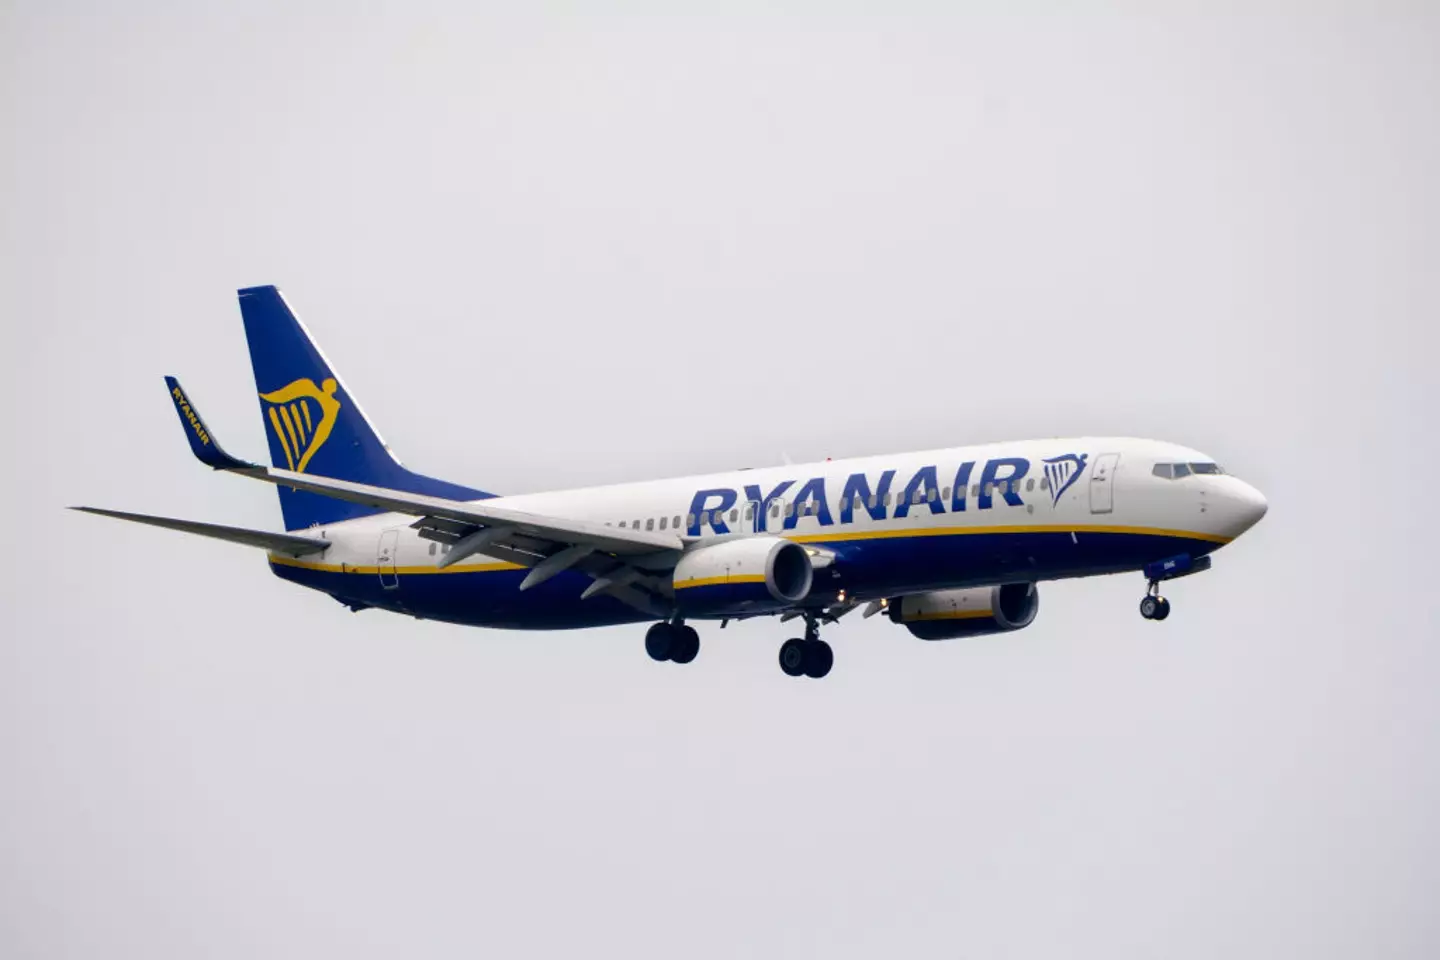 Ryanair are having a flash sale for numerous attractive European destinations.